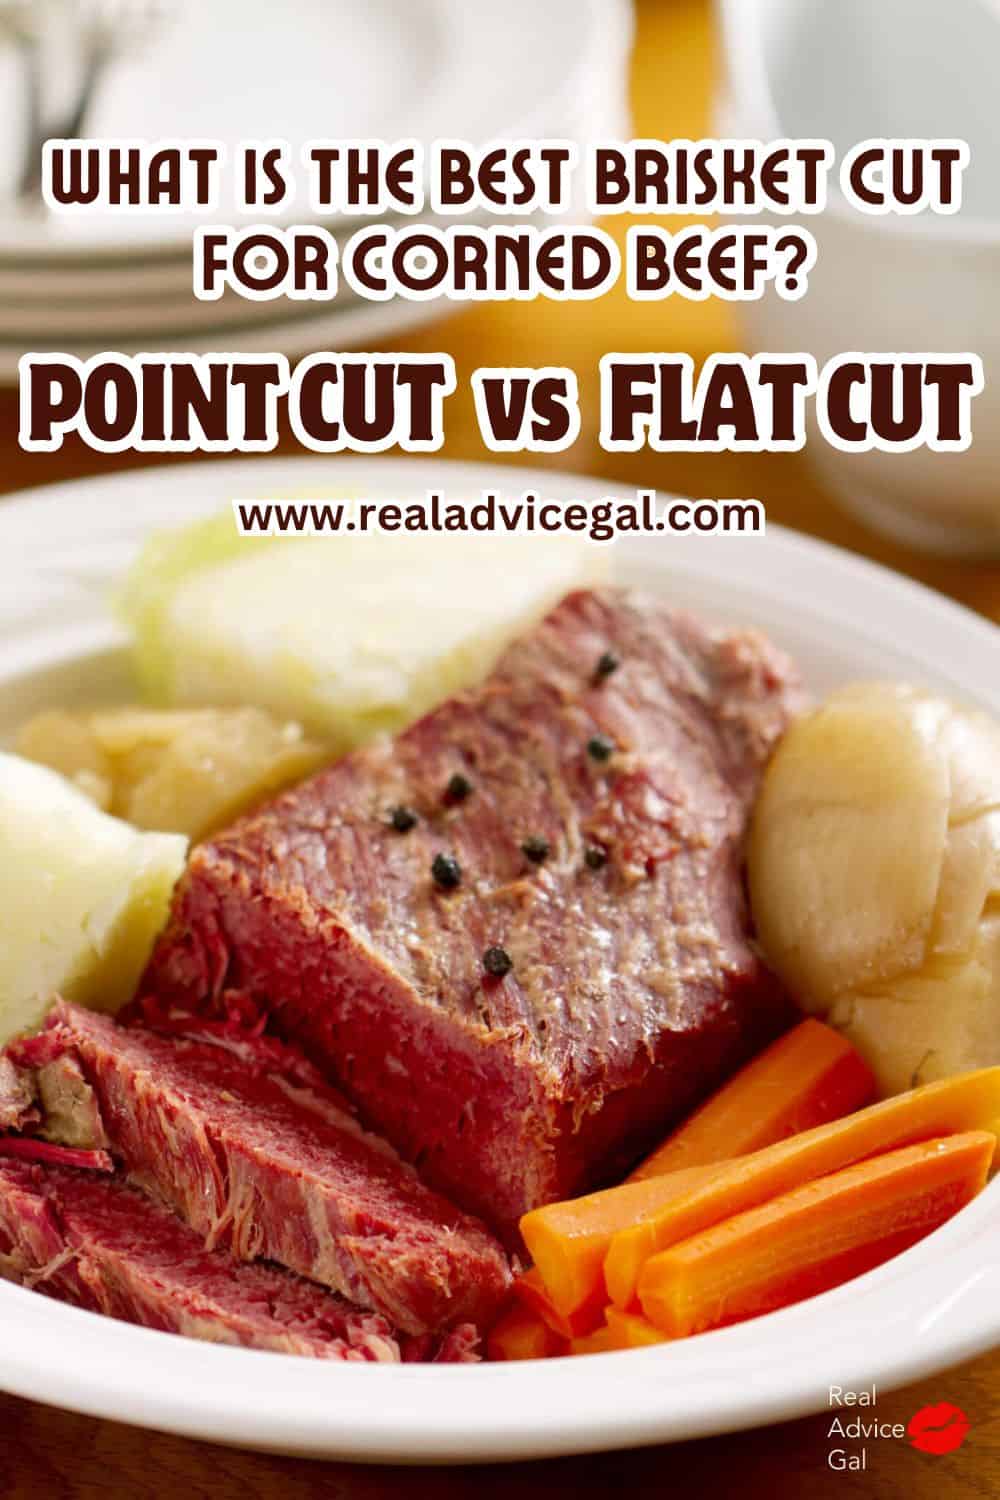 Point cut vs flat cut for corned beef